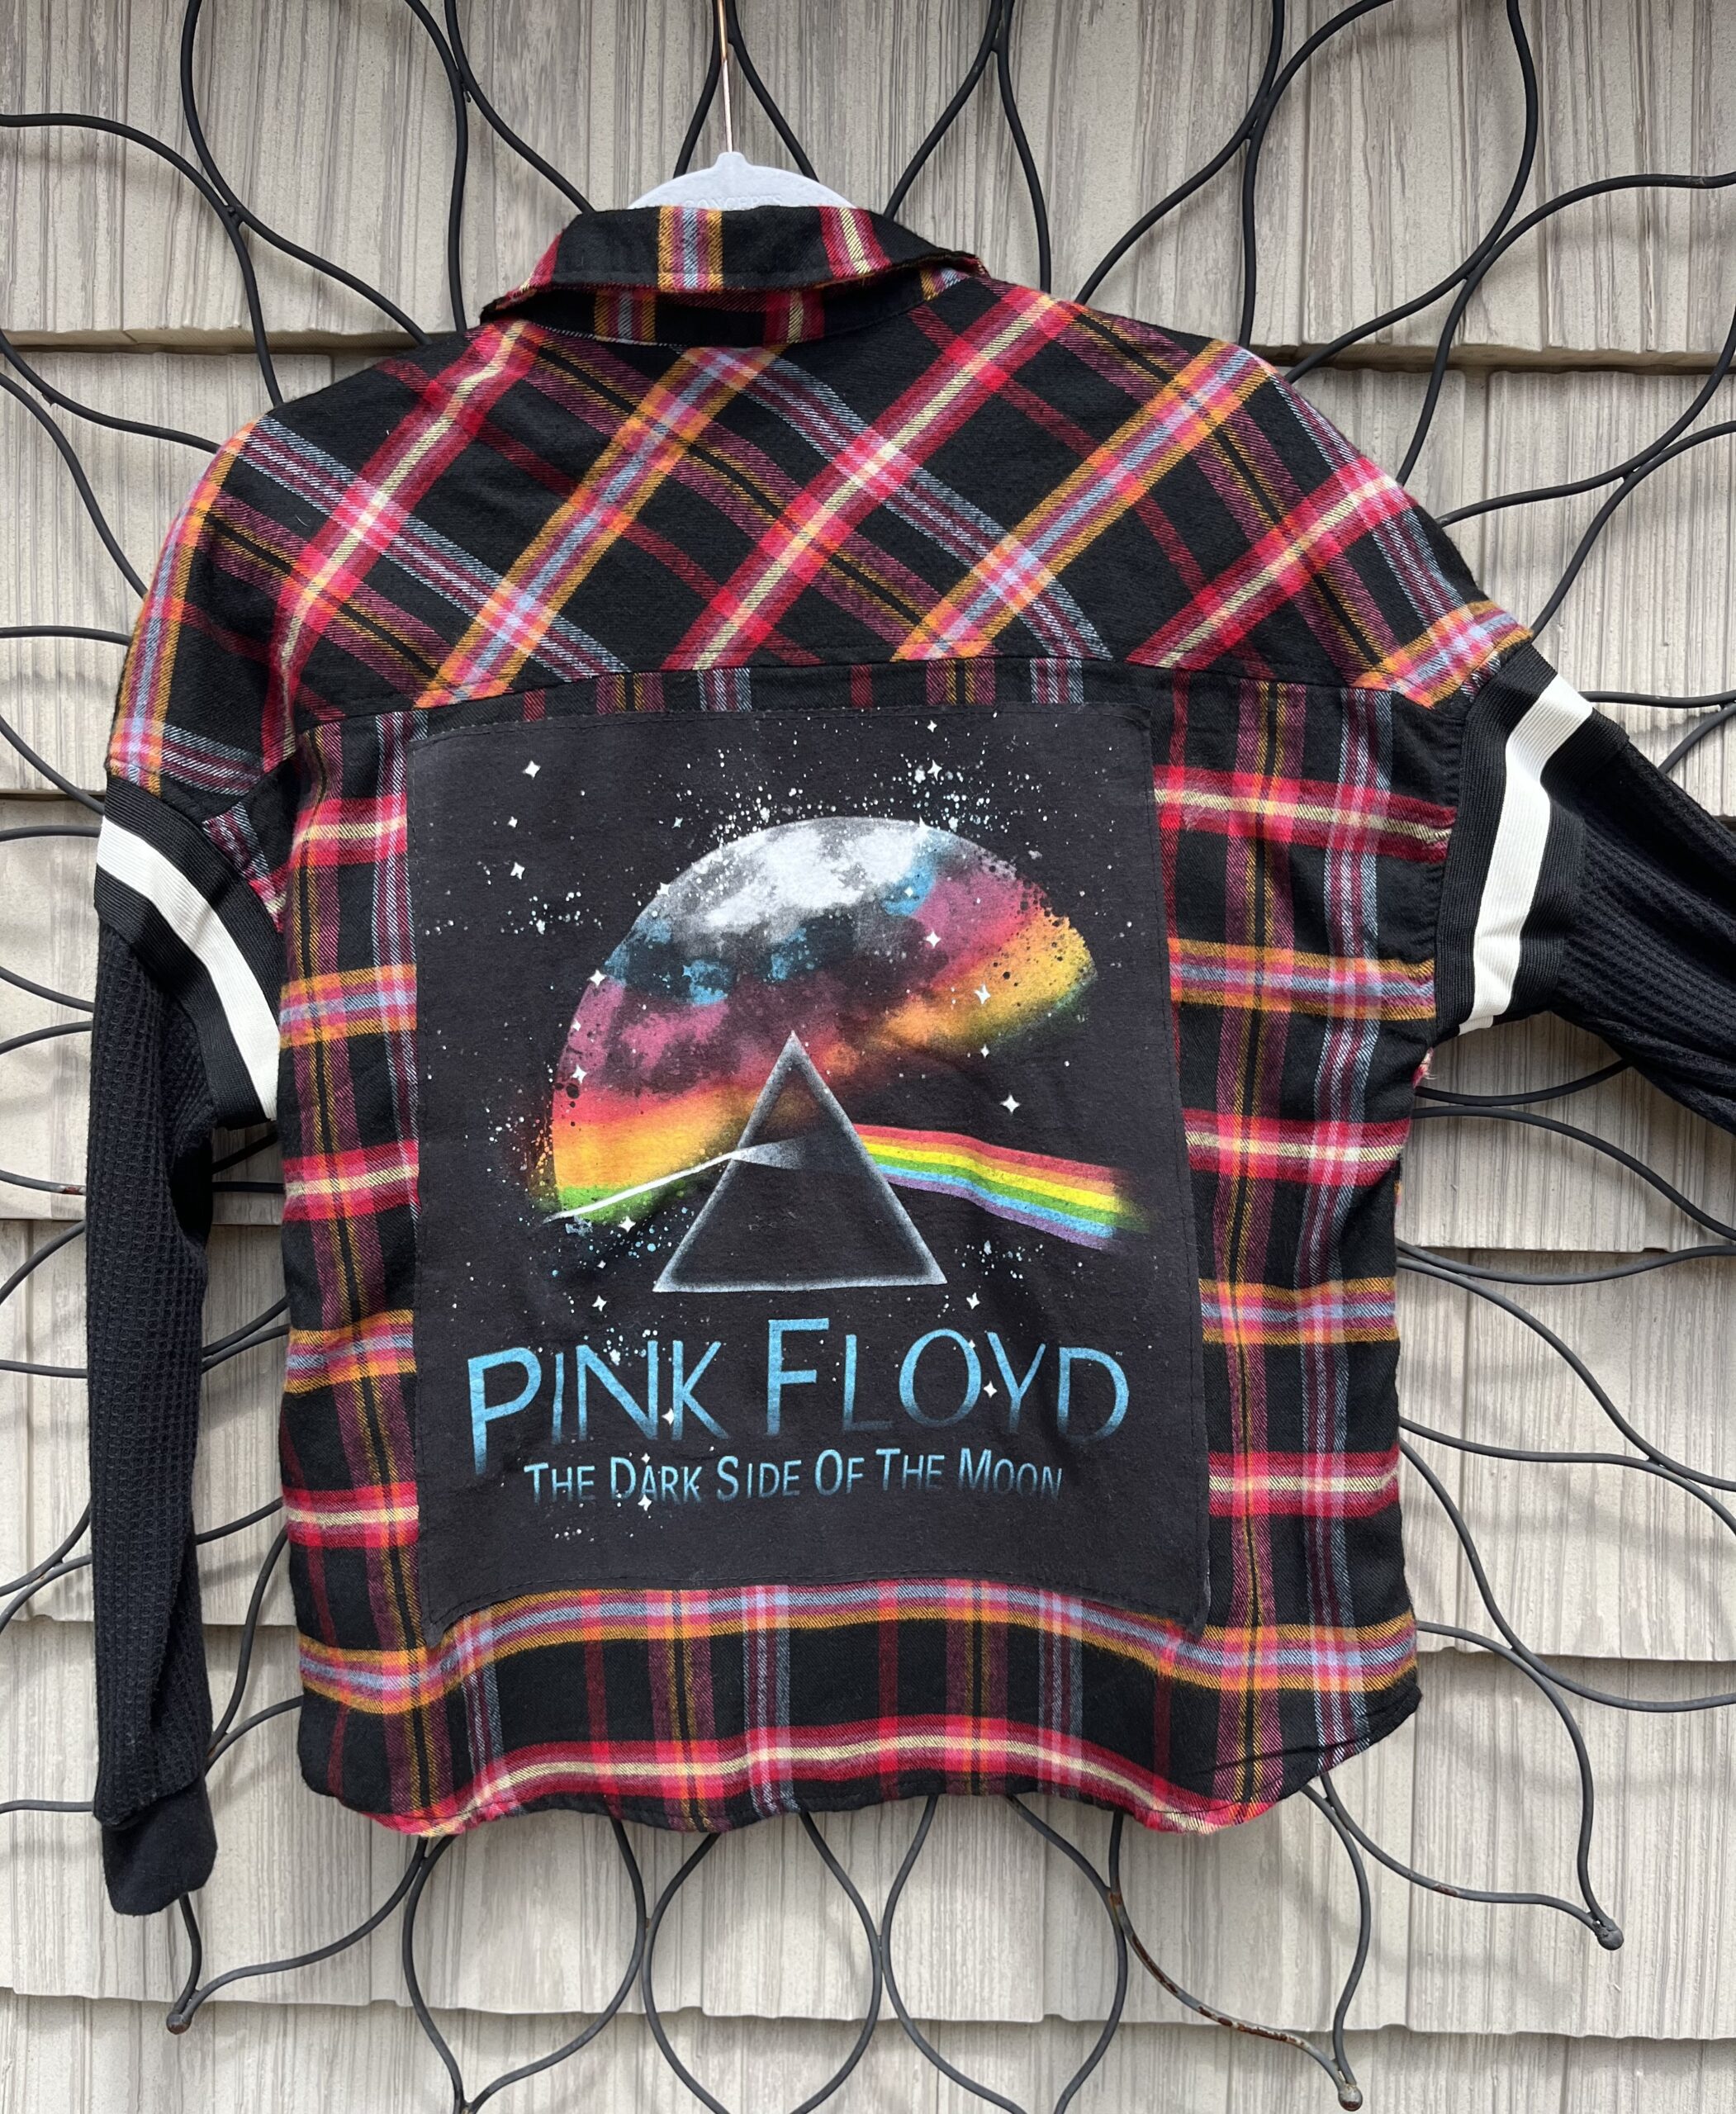 Pink floyd plaid shirt.